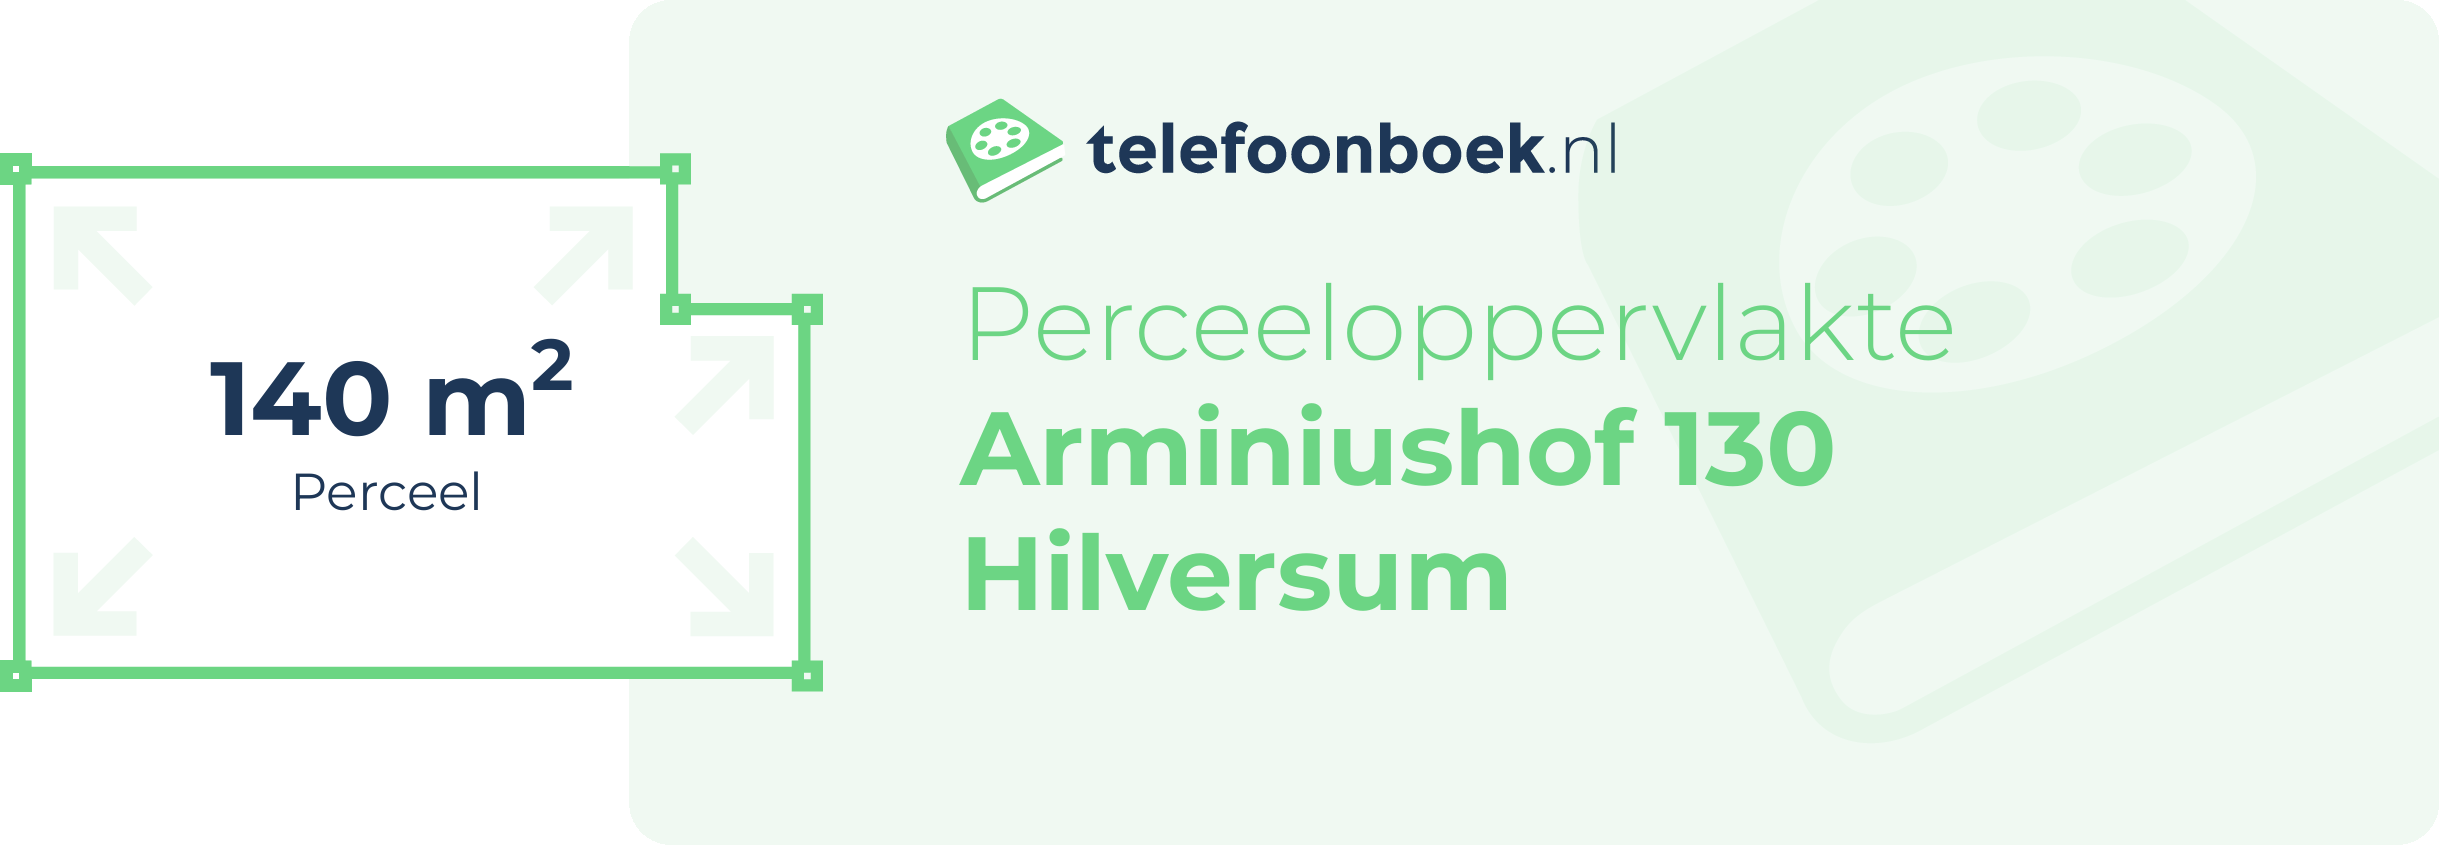 Perceeloppervlakte Arminiushof 130 Hilversum